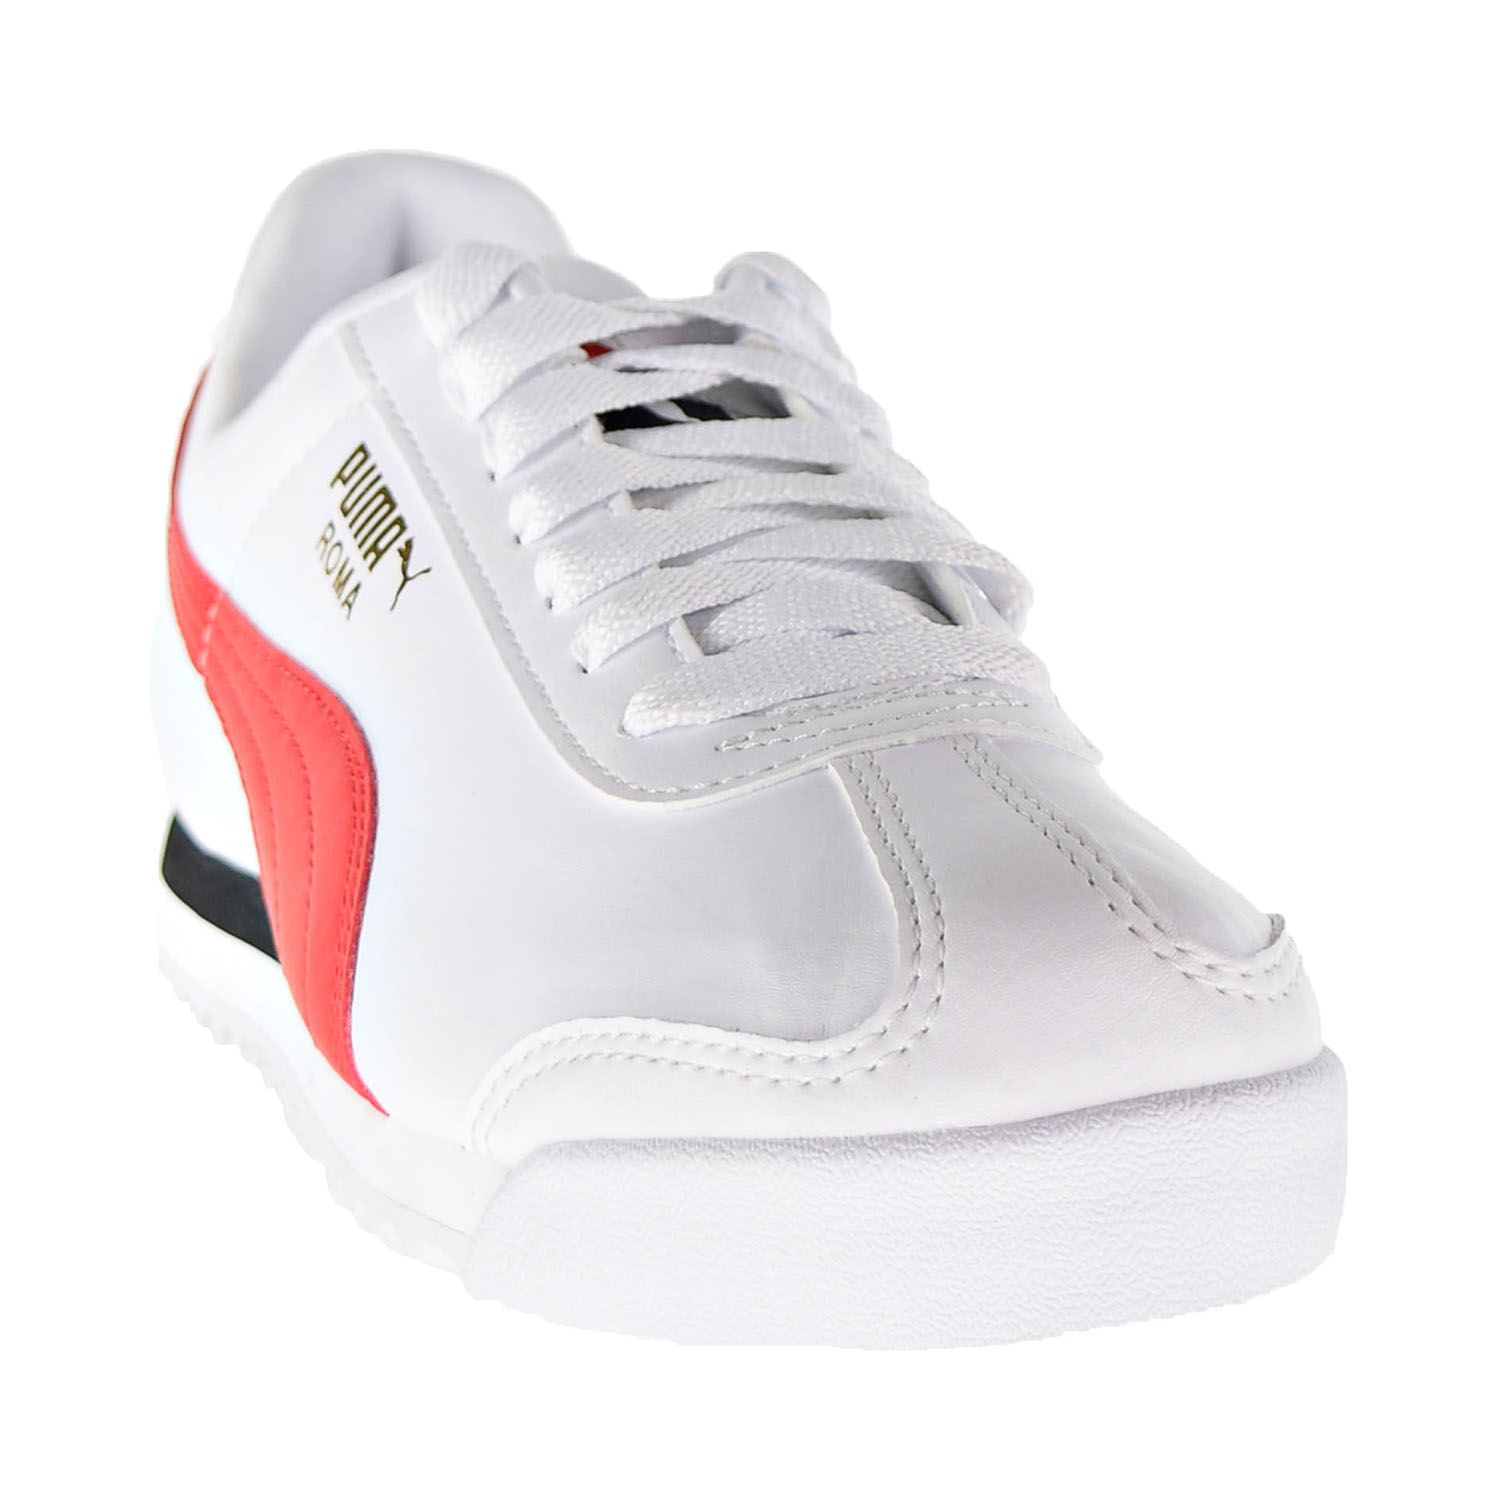 Puma Roma Basic+ Men's Shoes Puma White-High Risk Red 369571-11 - image 2 of 6